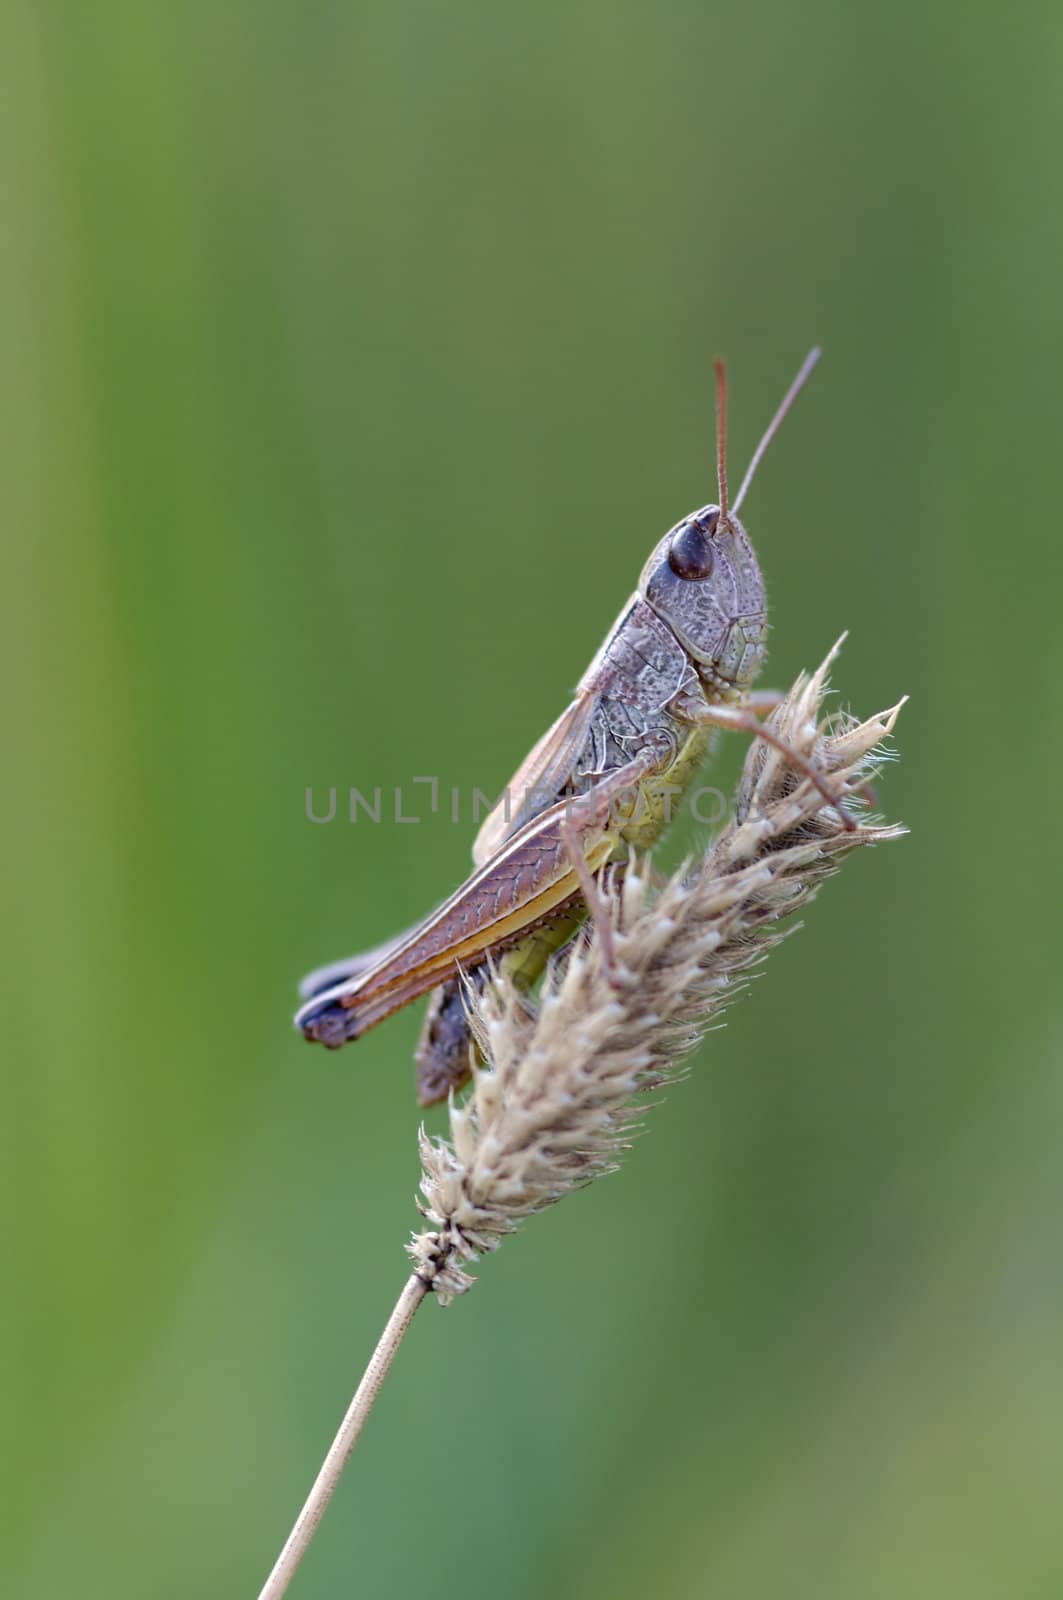 Detail (close-up) of a grasshopper